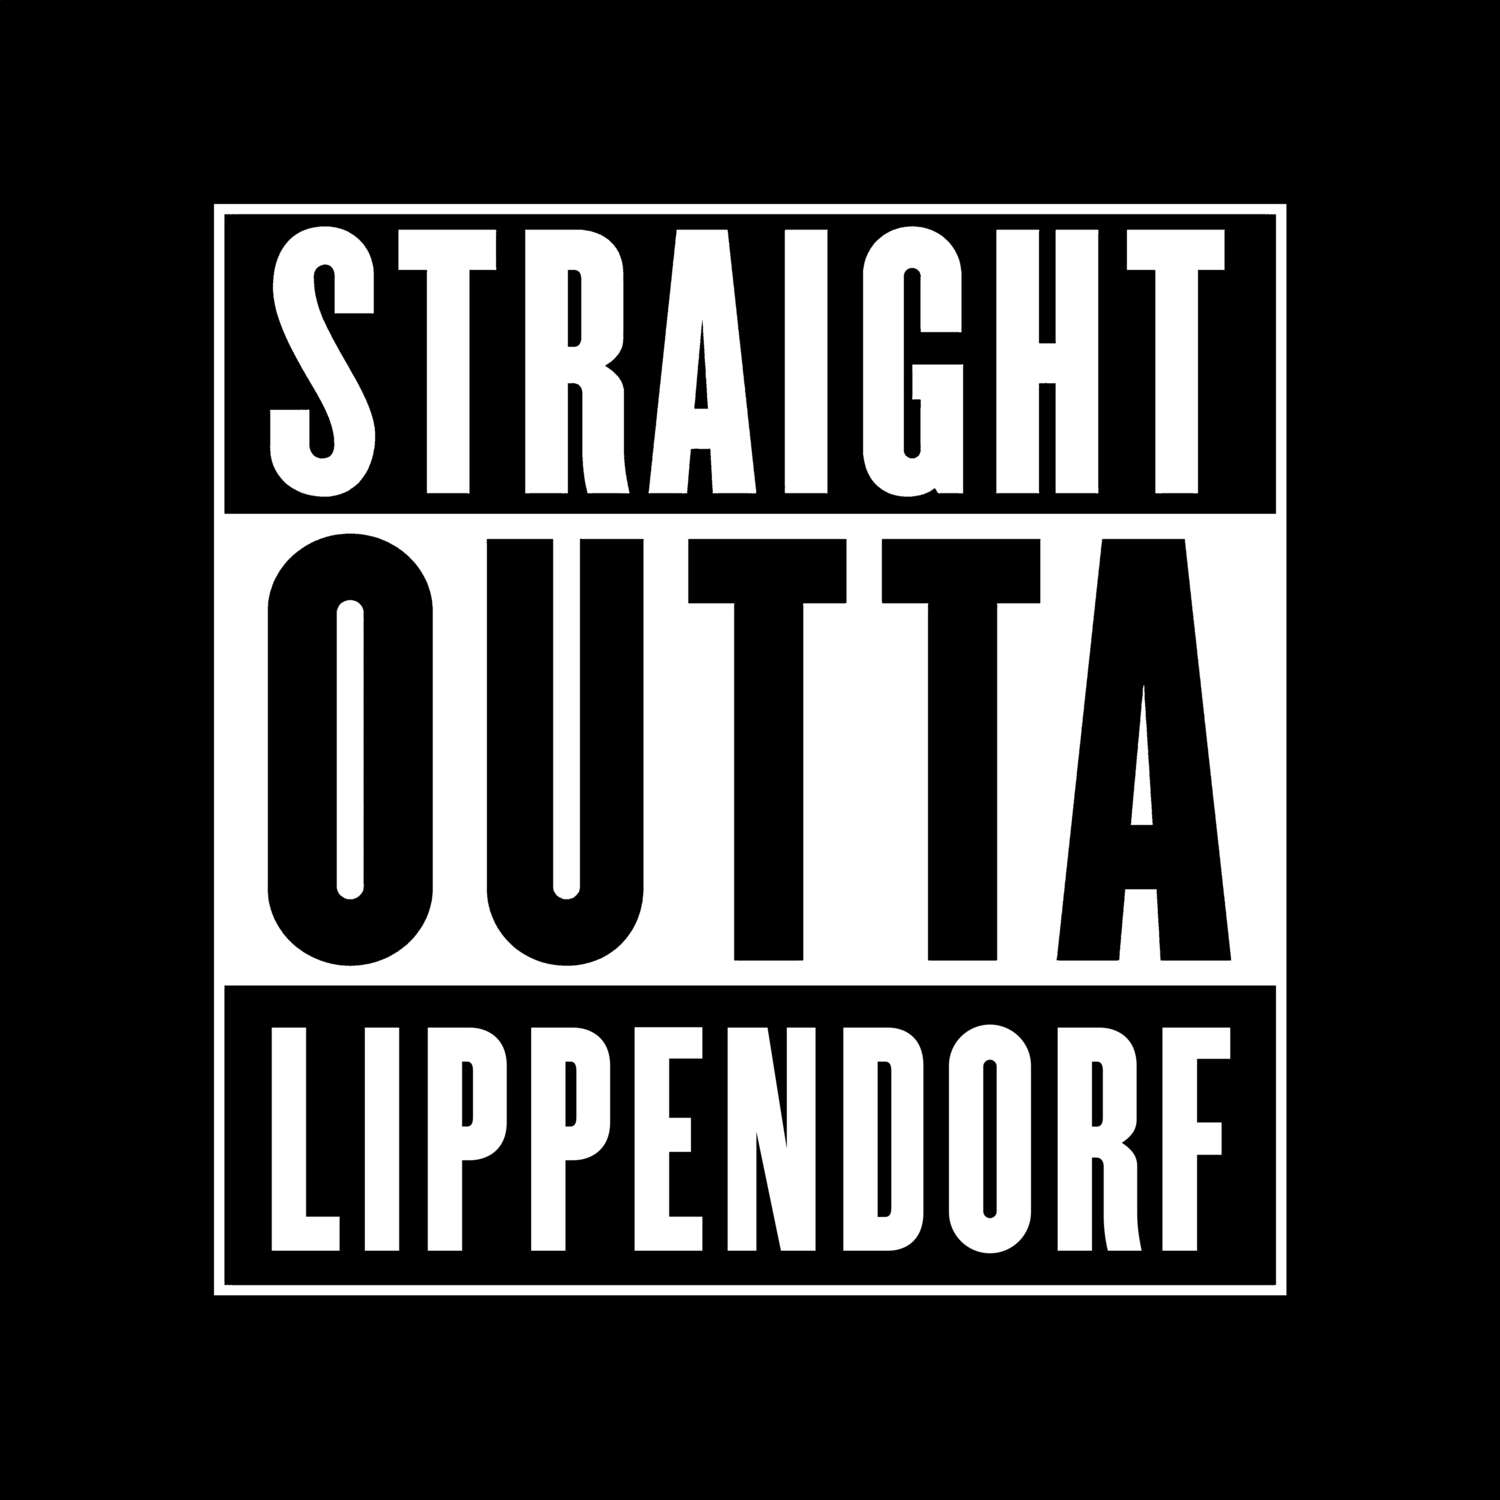 Lippendorf T-Shirt »Straight Outta«